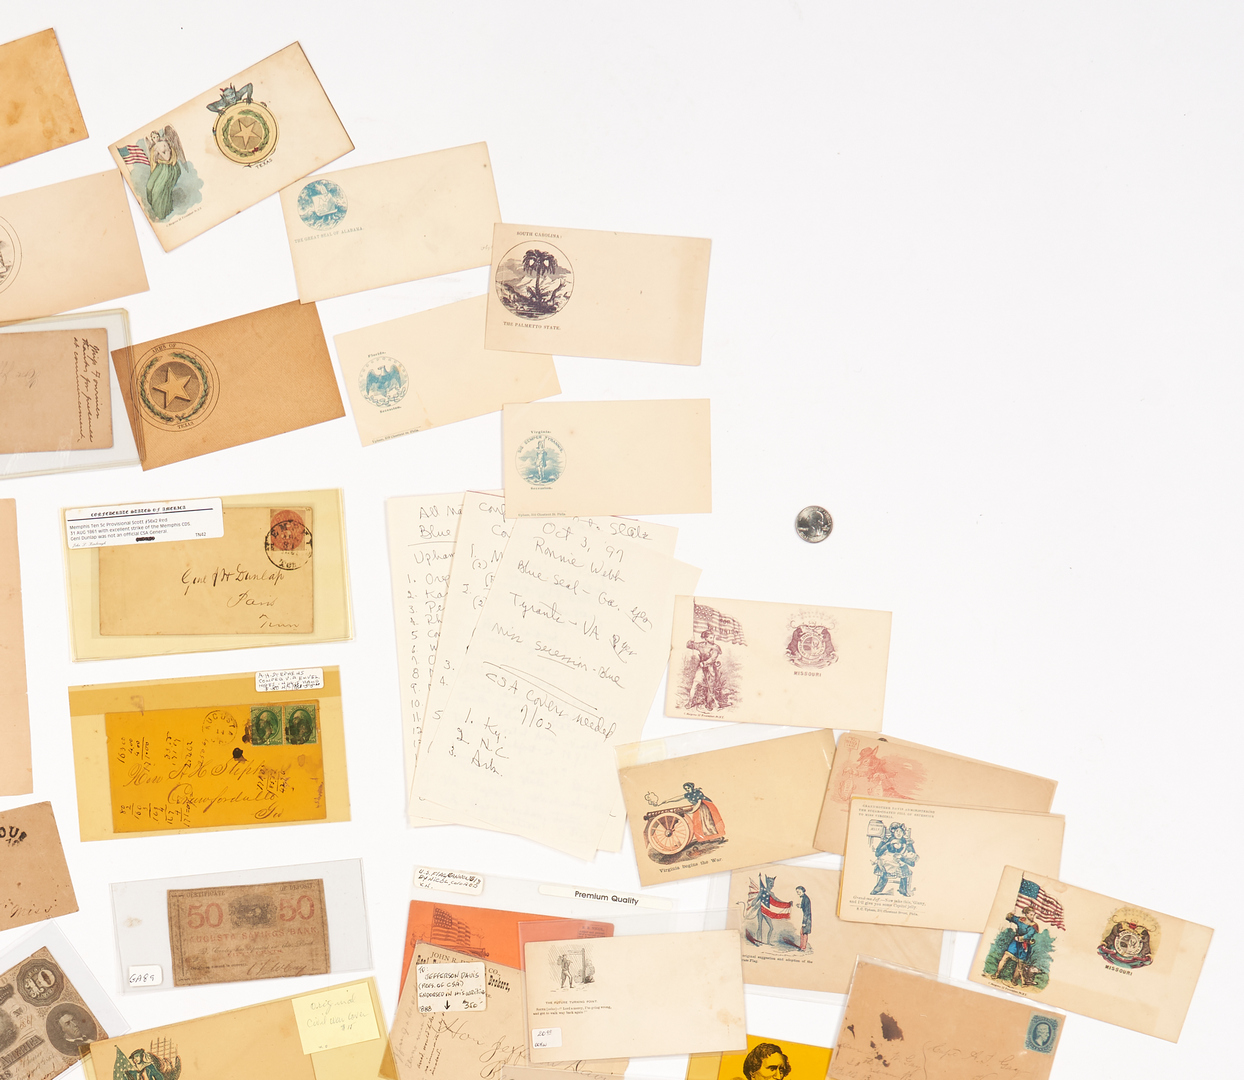 Lot 386: Civil War Postal Covers & Currency, incl. Jefferson Davis handwritten endorsement